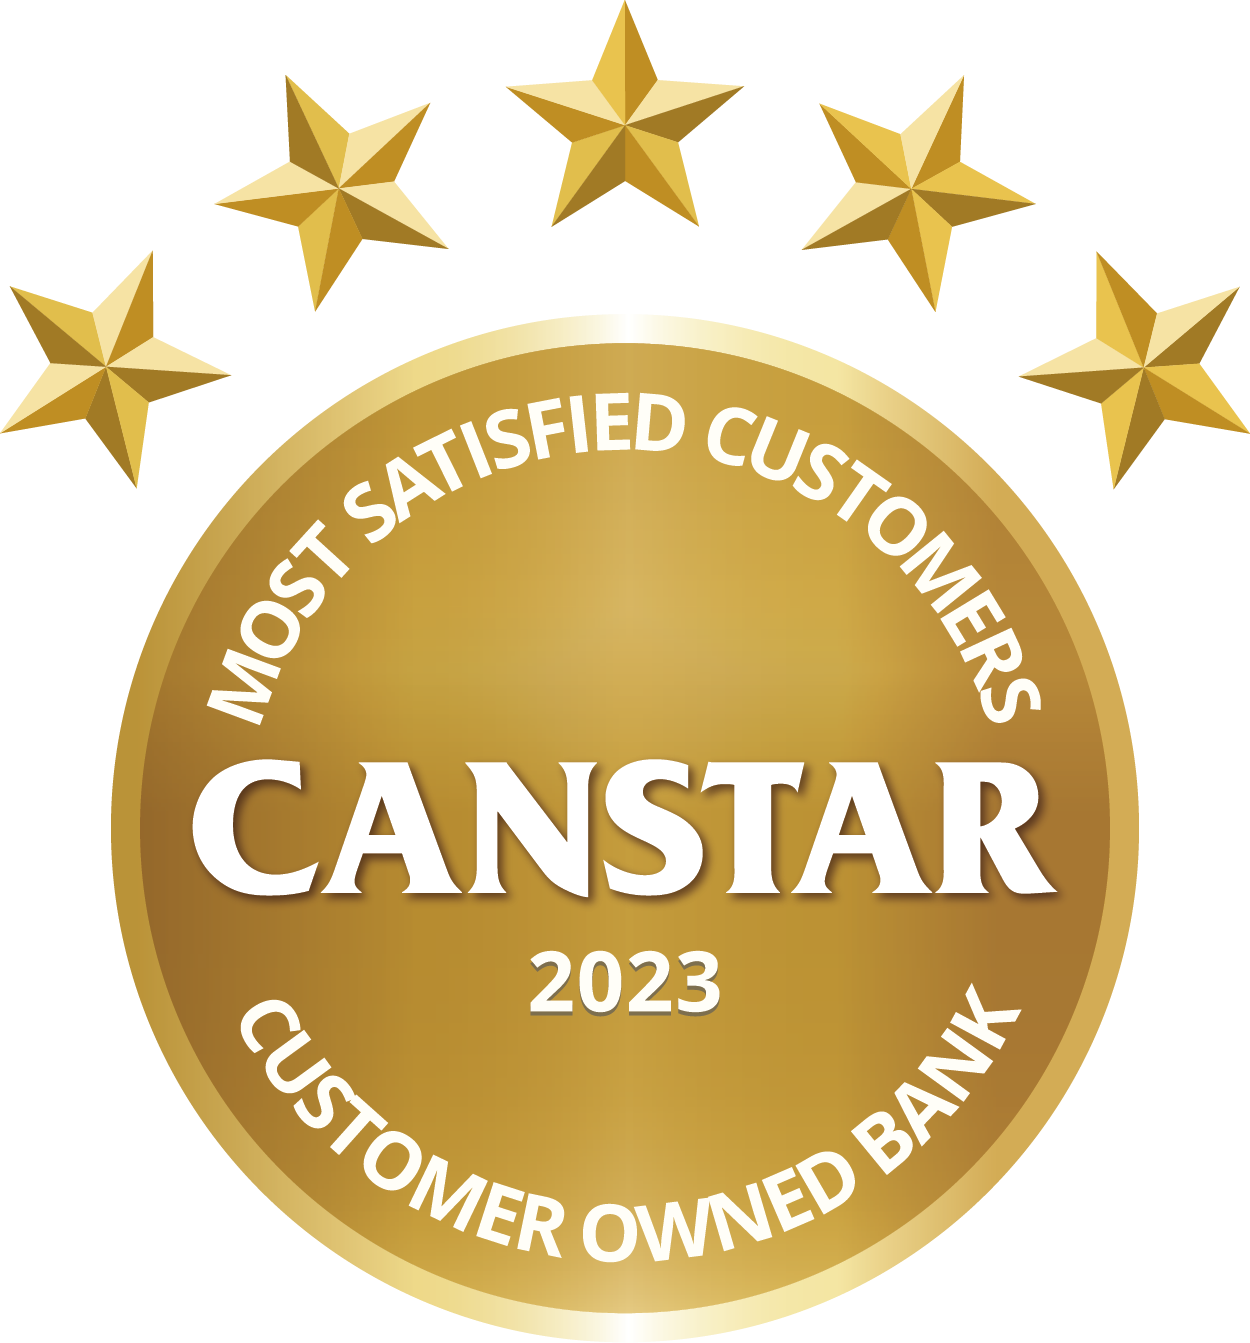 Canstar 2023 award